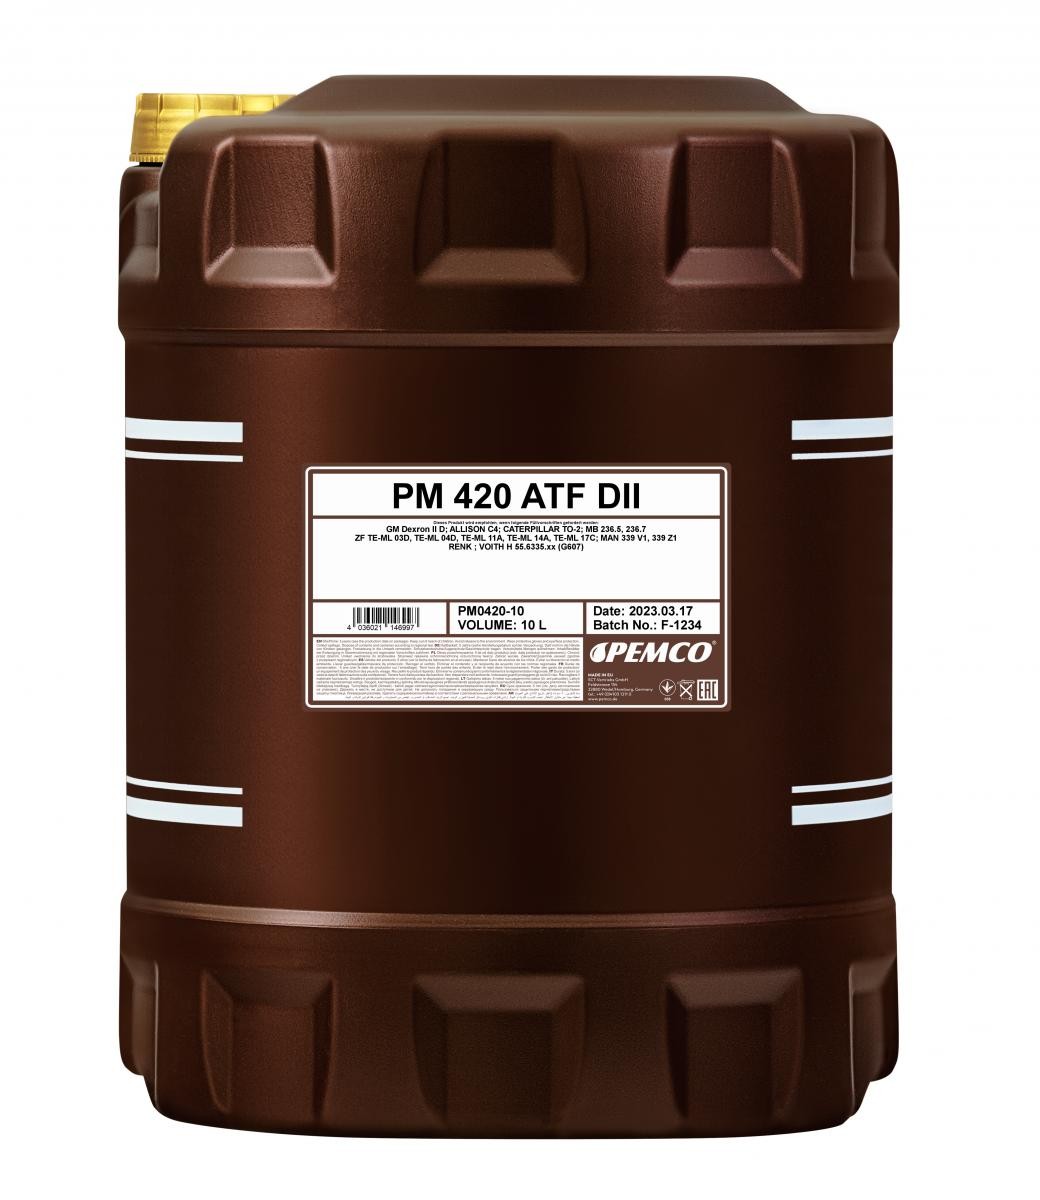 PEMCO iMATIC 420 ATF IID PM0420-10 Automatic transmission fluid ATF II, 10l, Yellow